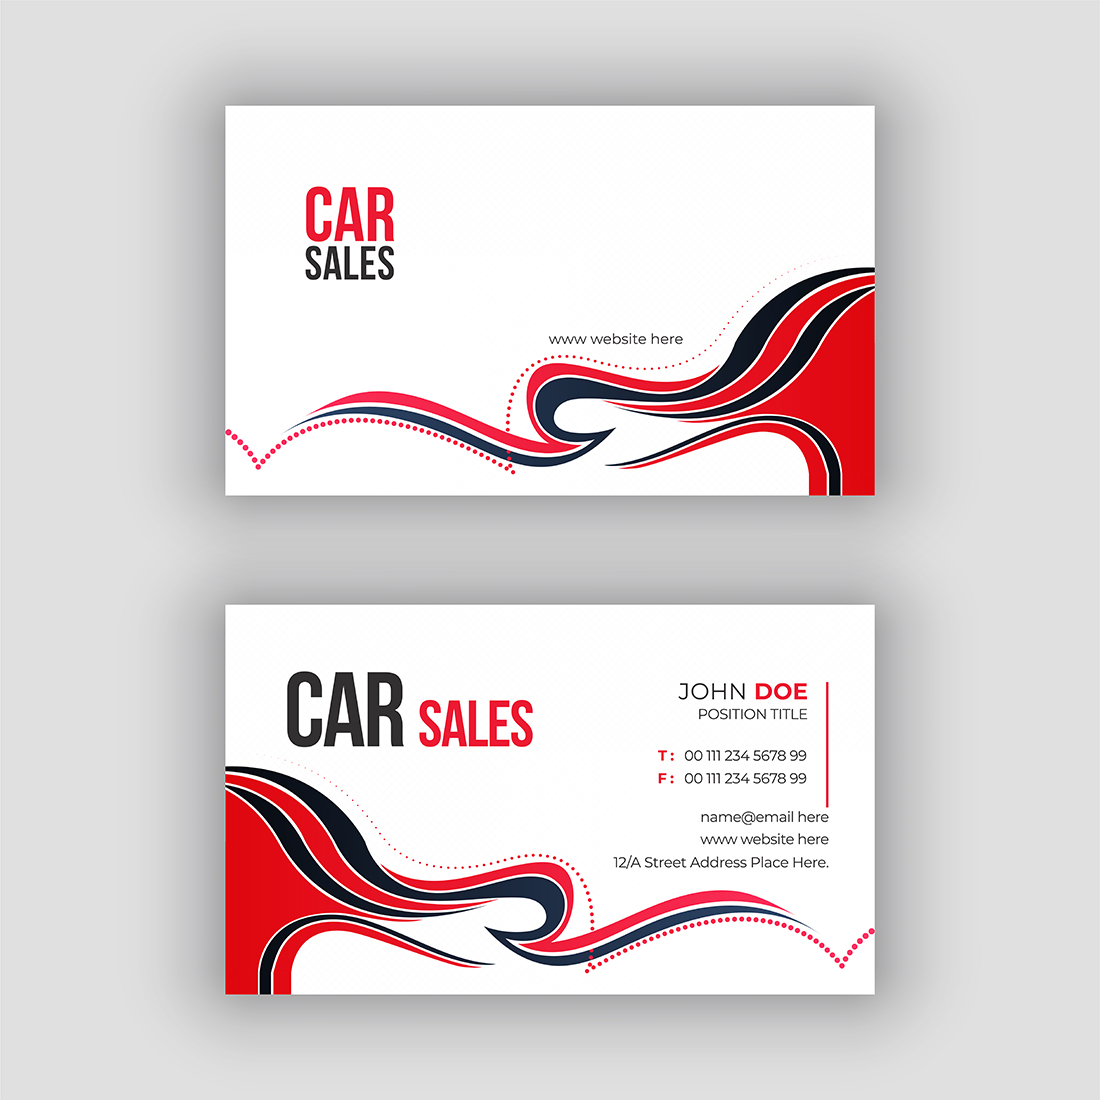 Car Dealer Professional Automotive Business Card Design Template preview image.